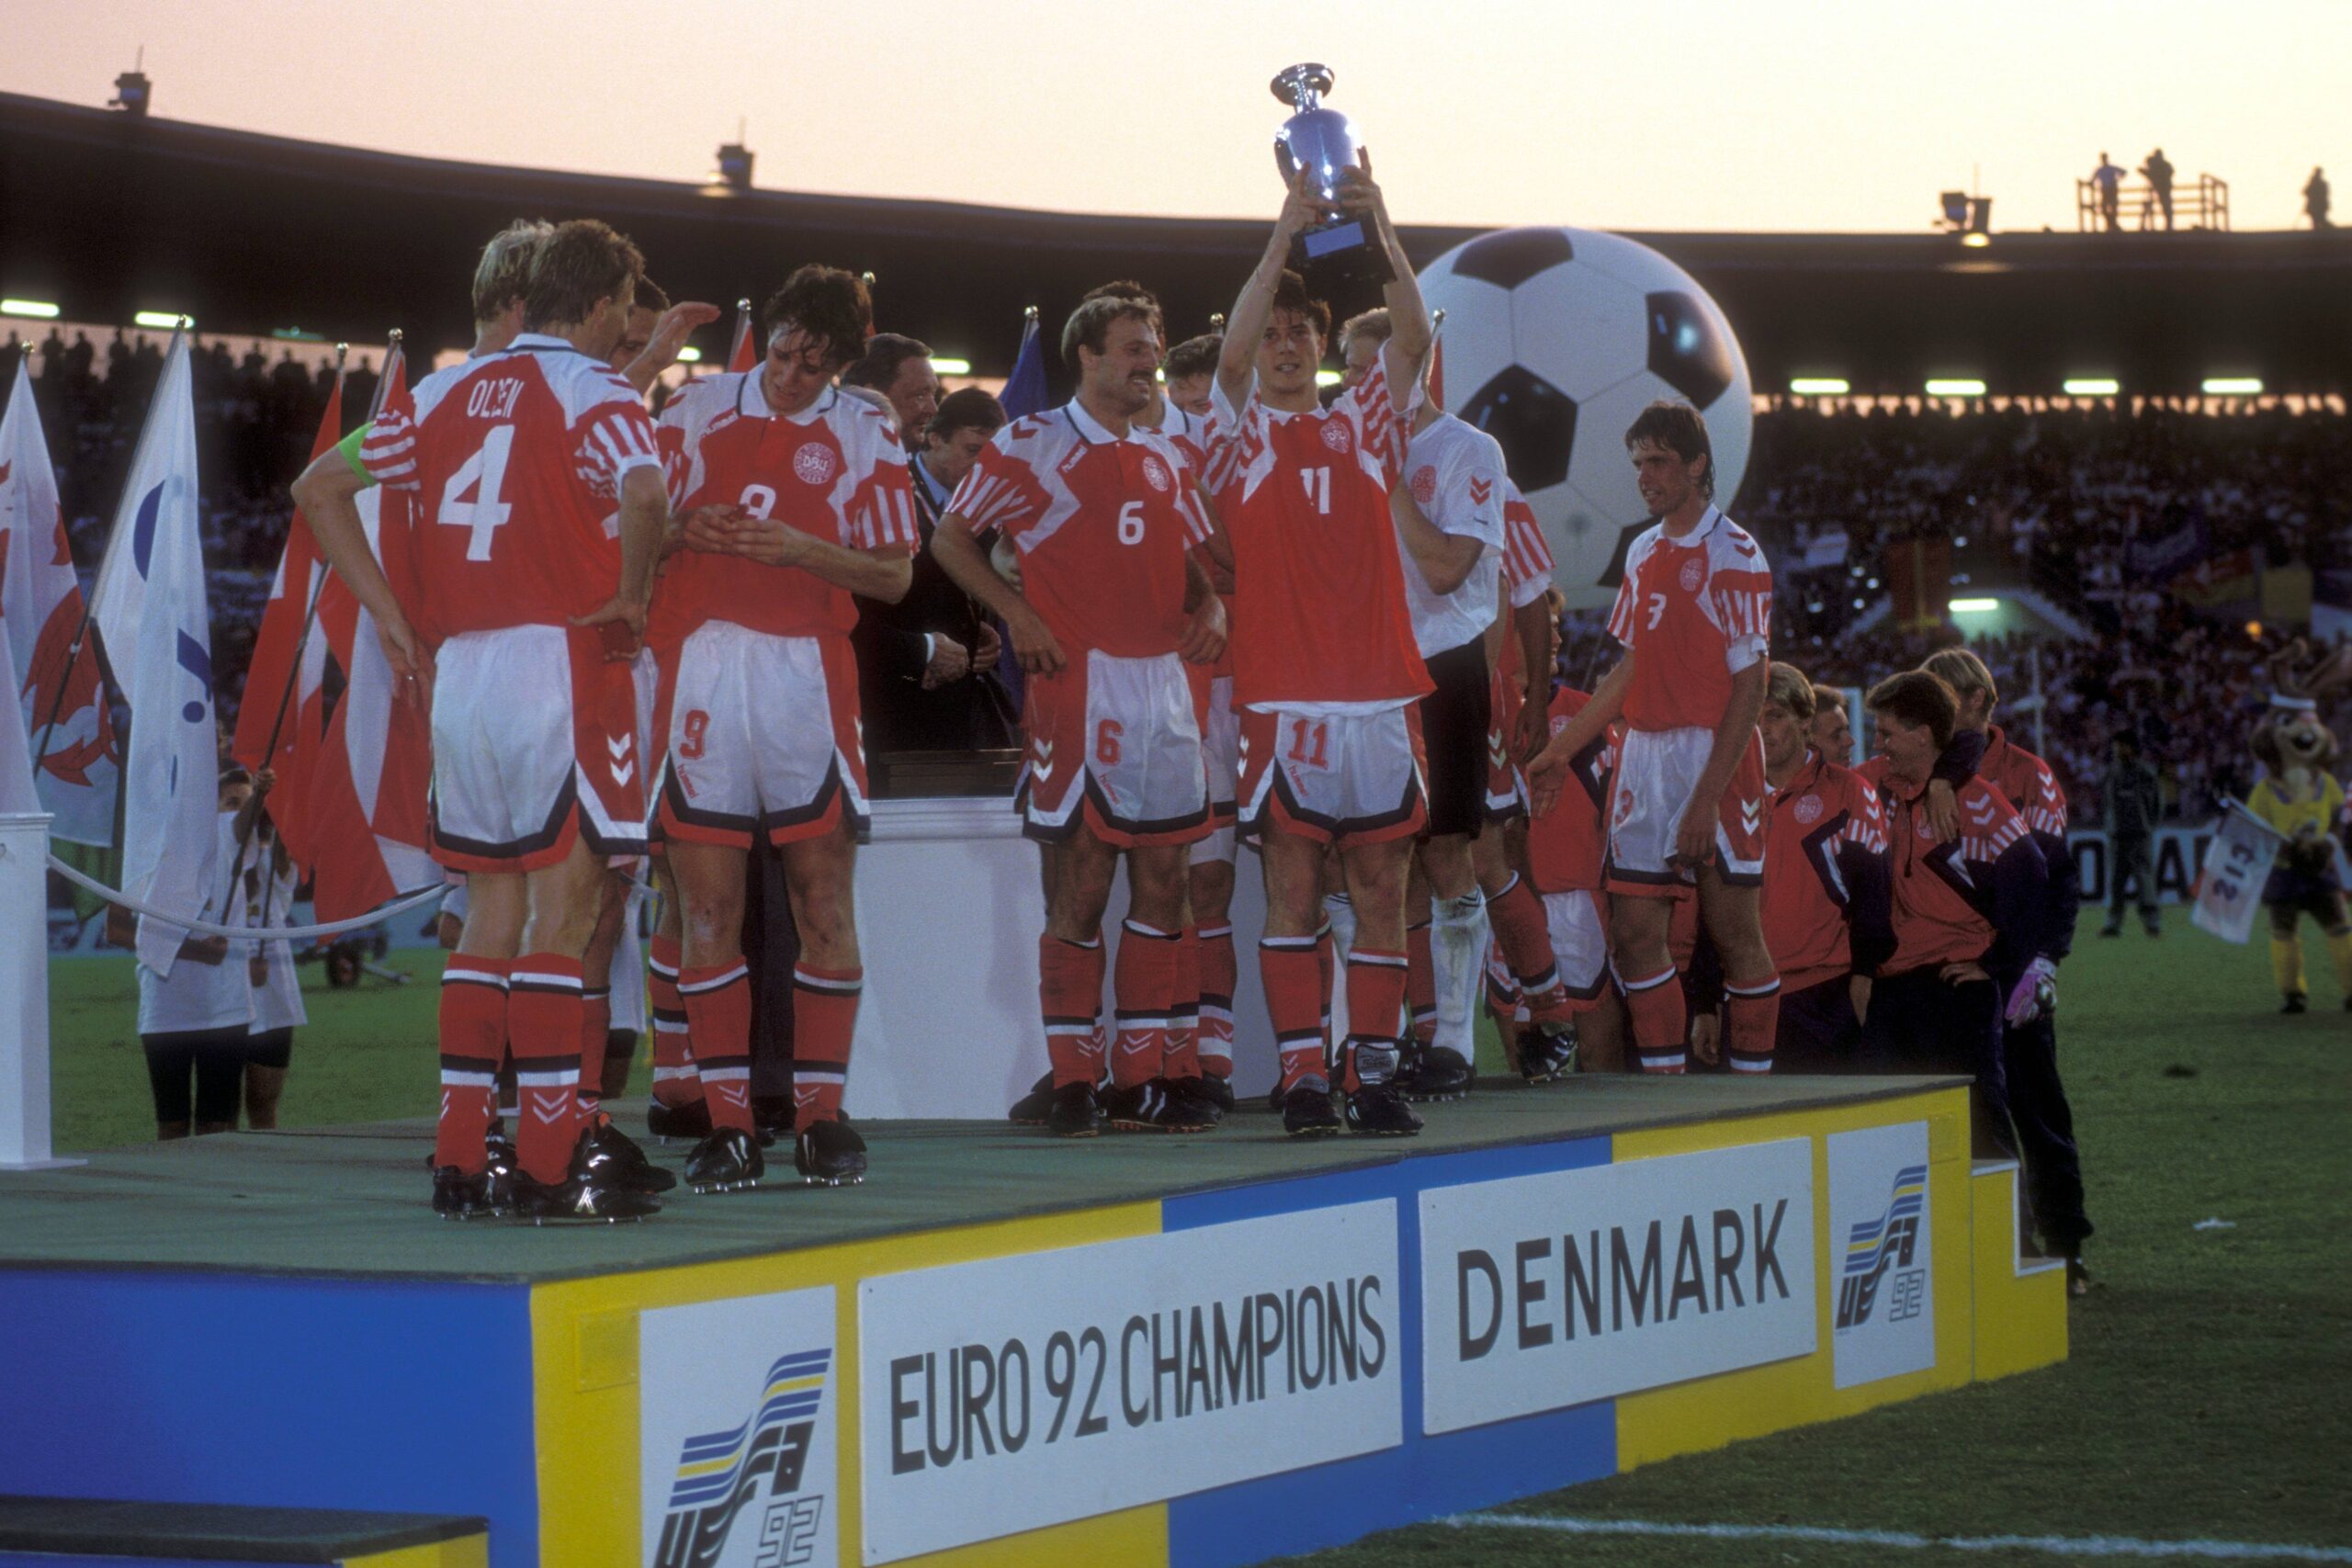 Denmark European Champions IMAGO / WEREK